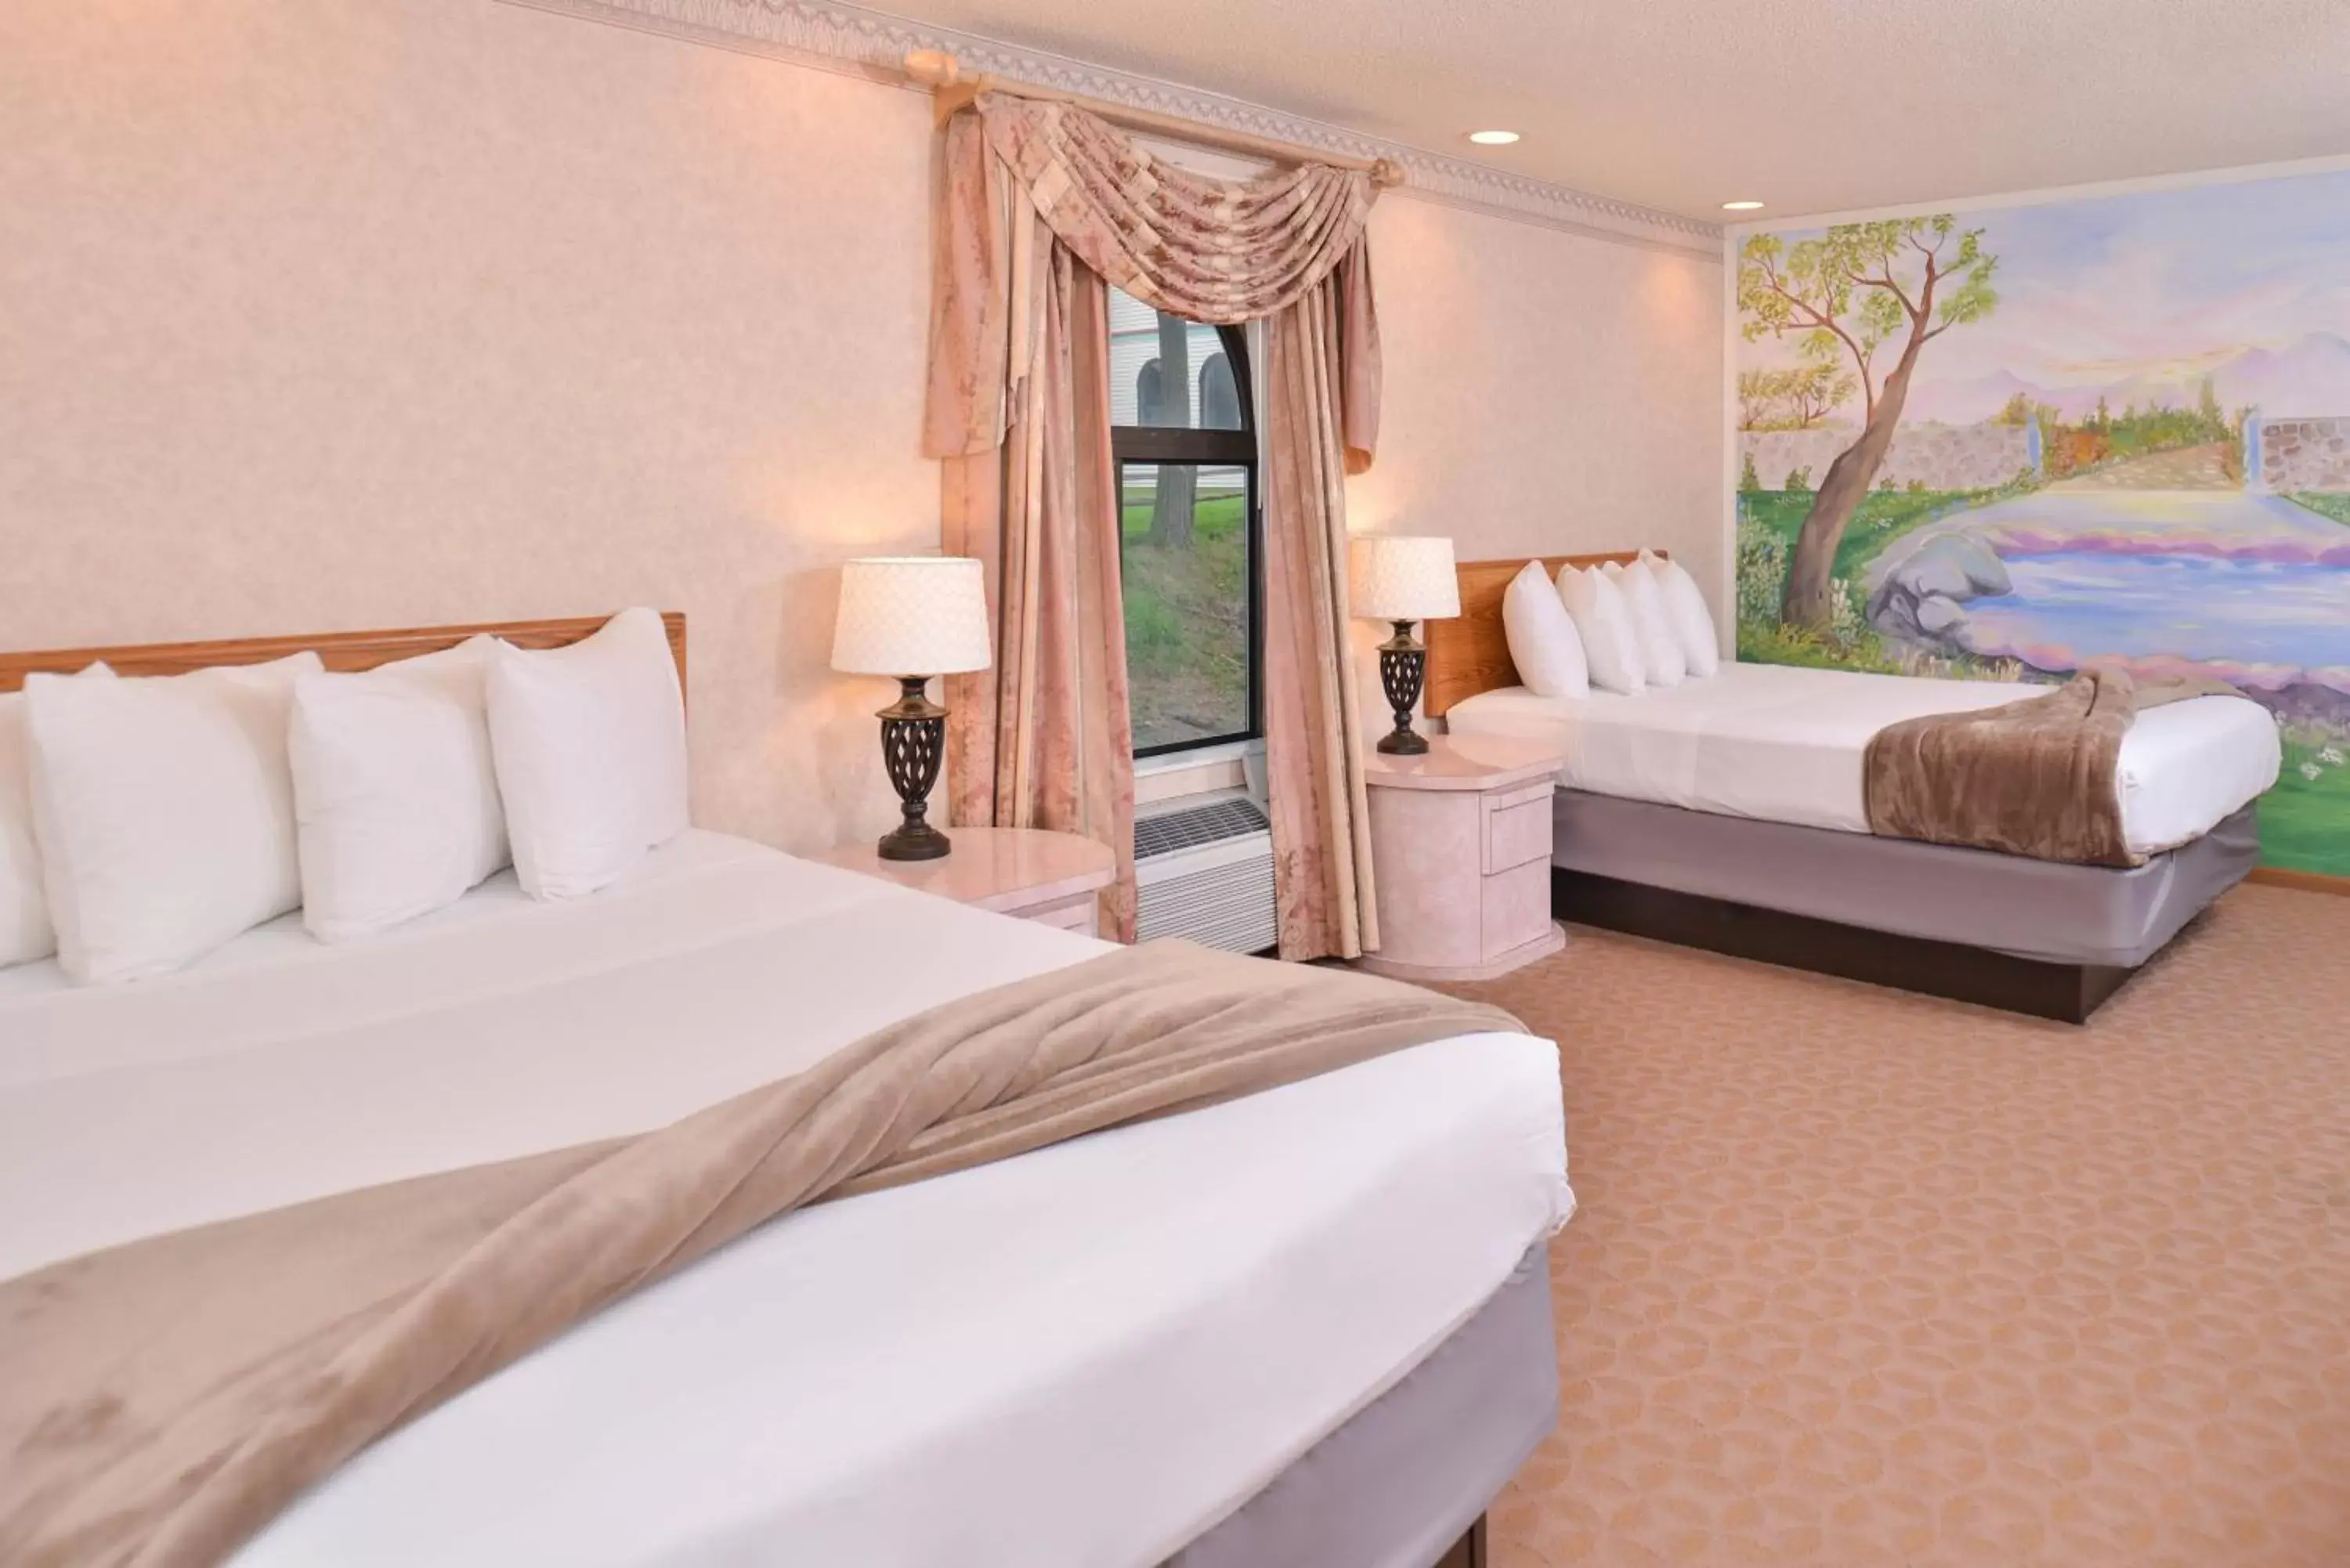 Bed, Room Photo in Atlantis Family Waterpark Hotel